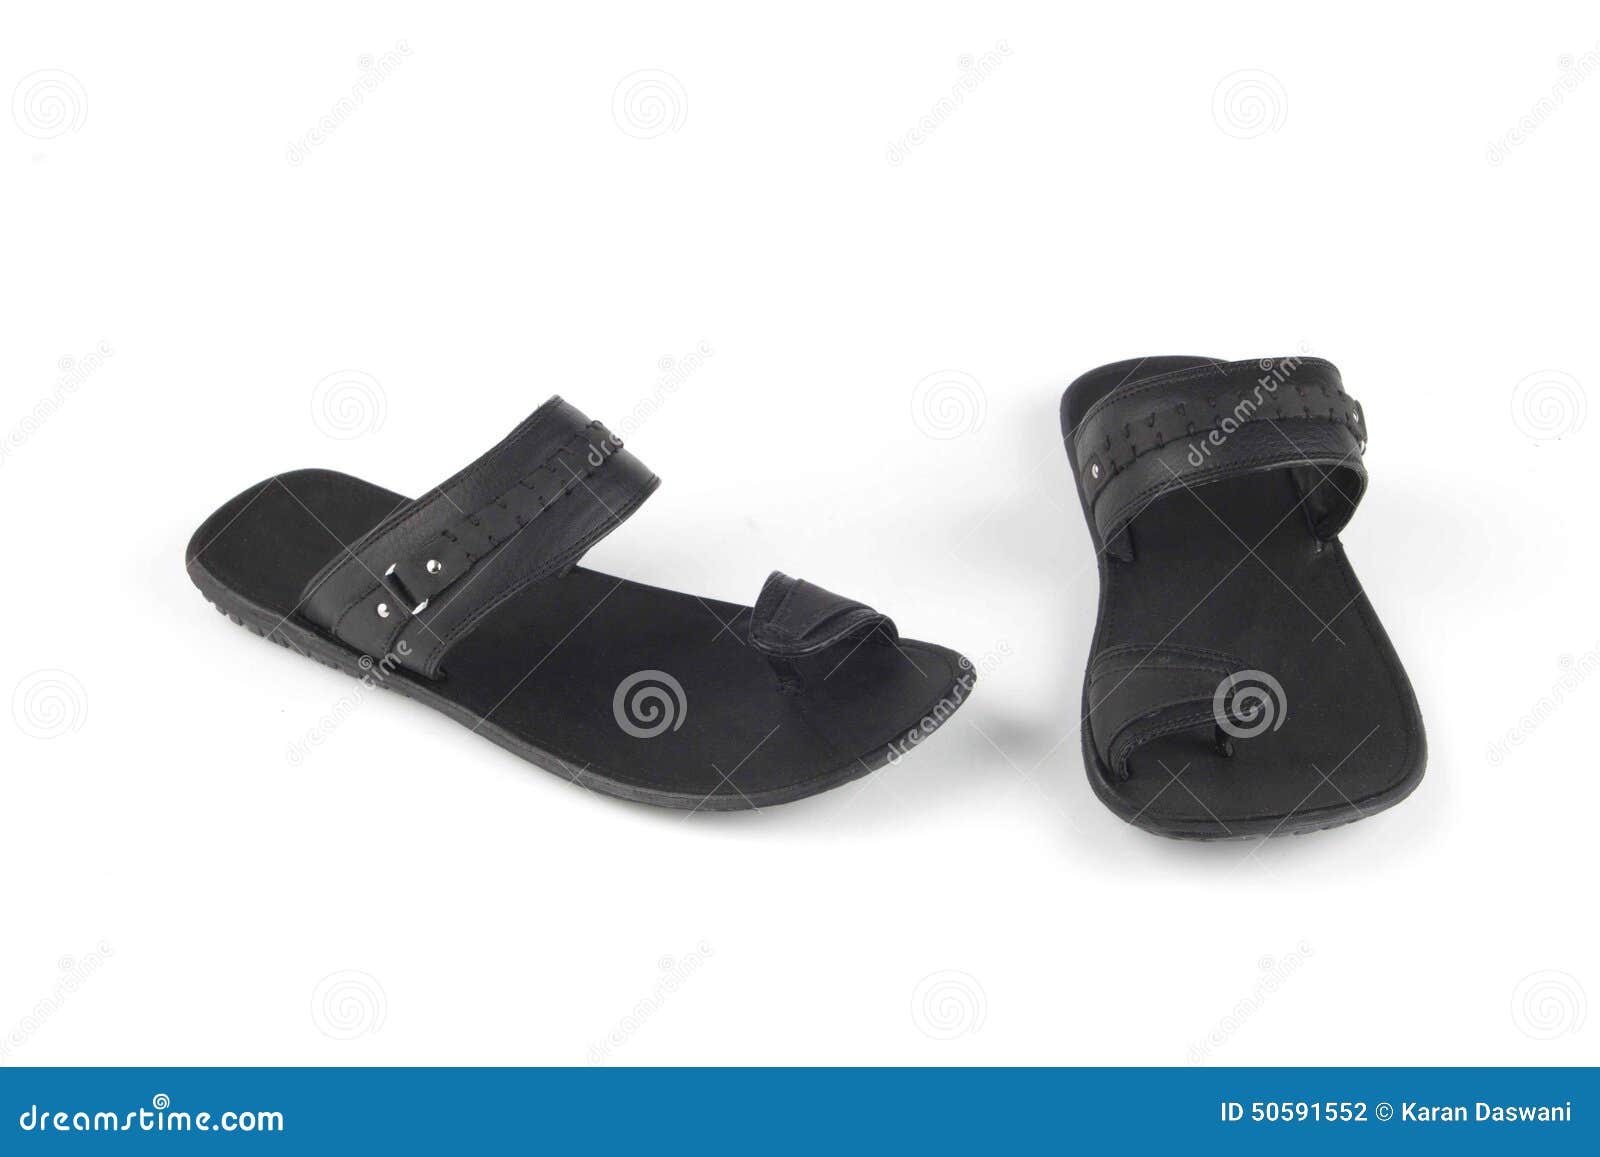 stylish leather slippers